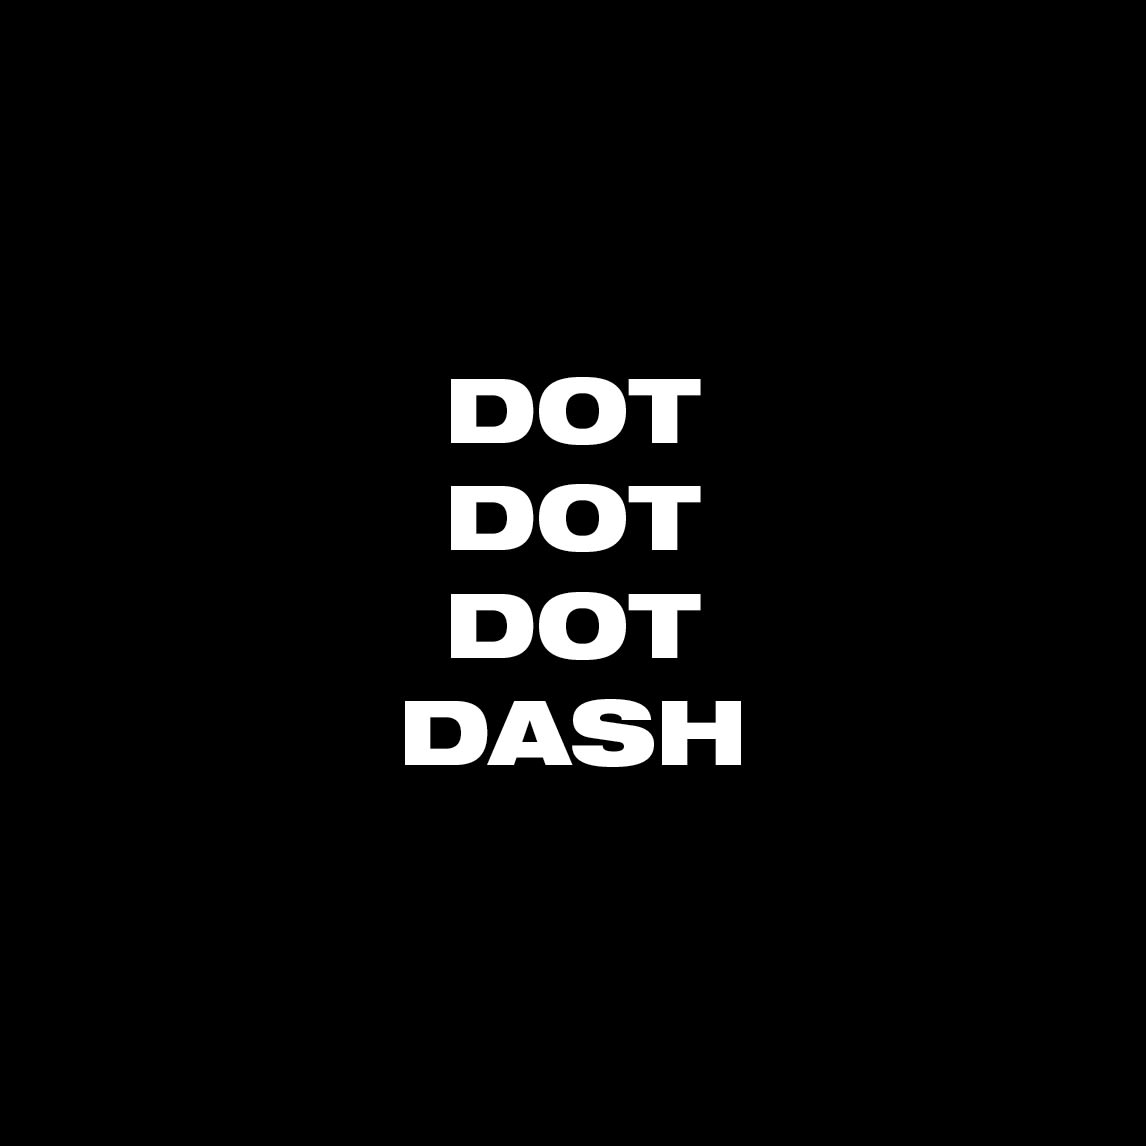 DOT DOT DOT DASH